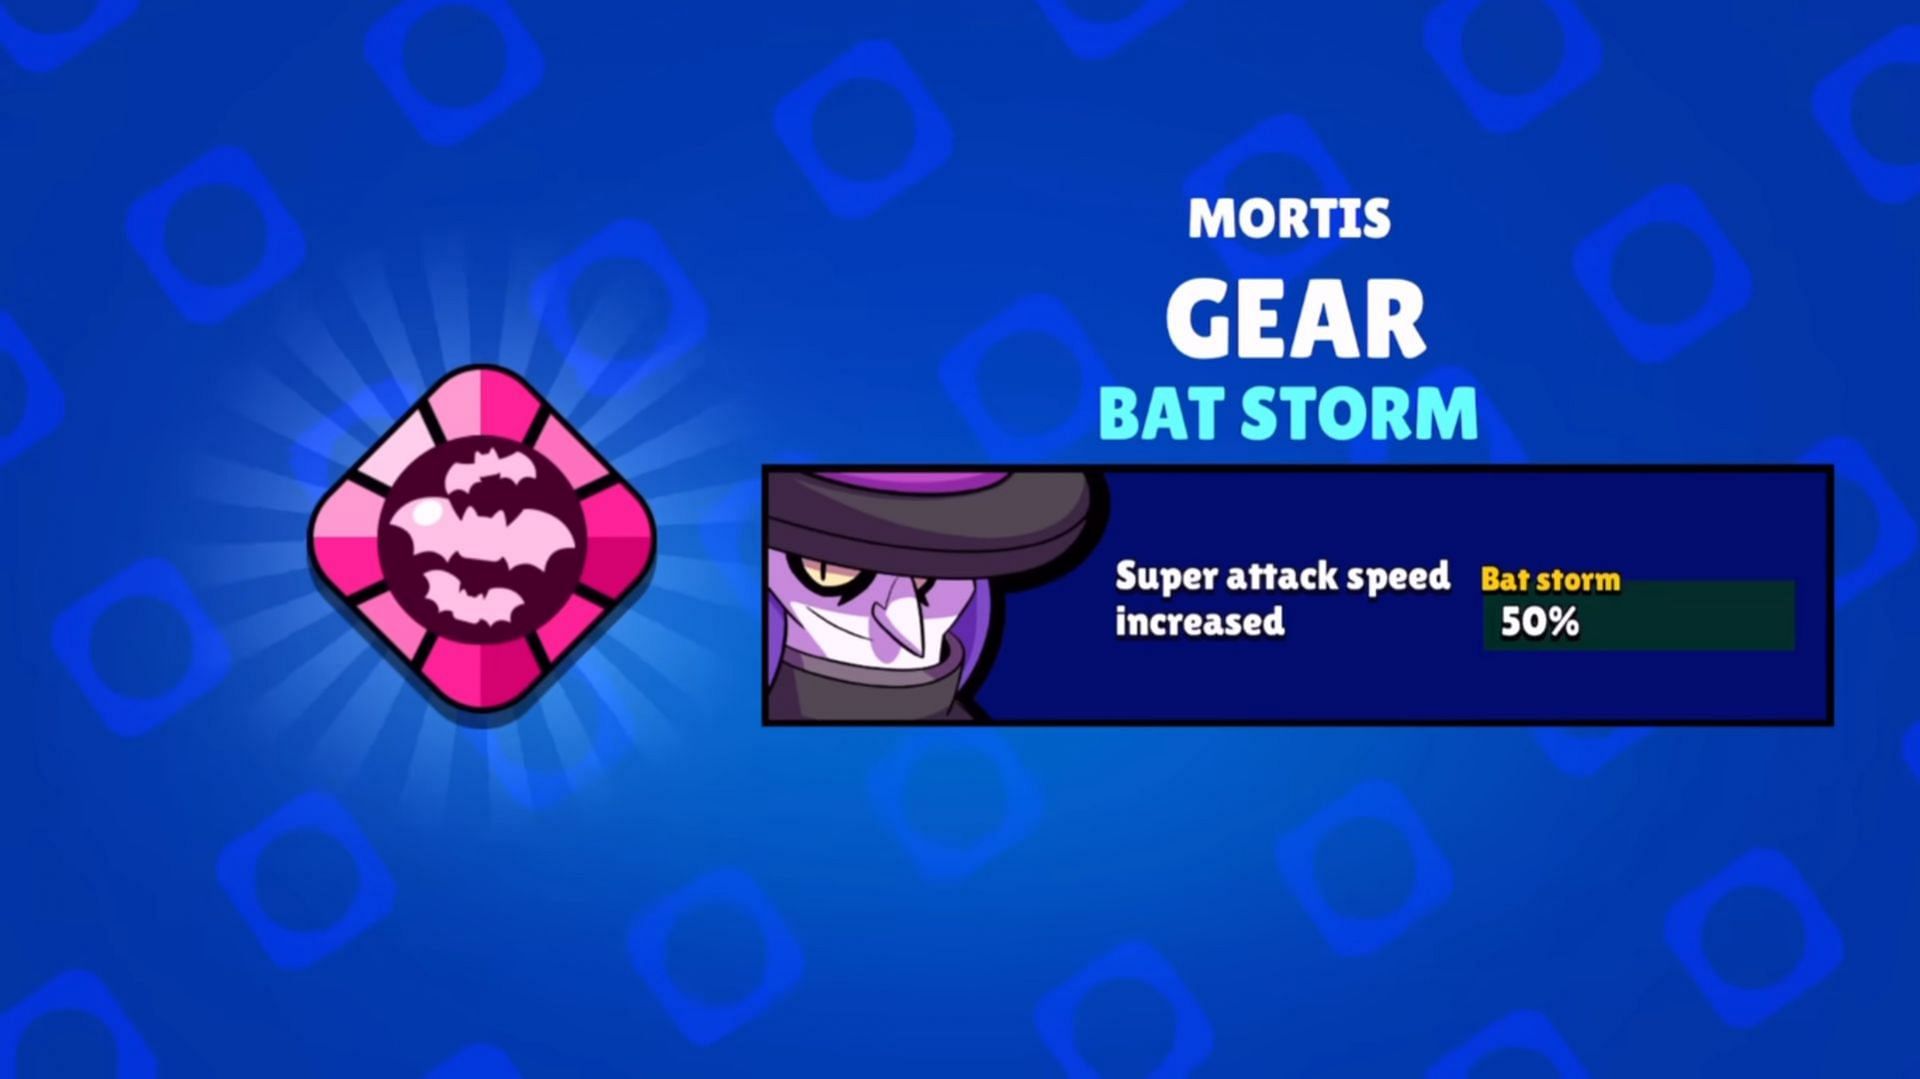 Bat Storm Mythic Gear (Image via Supercell)